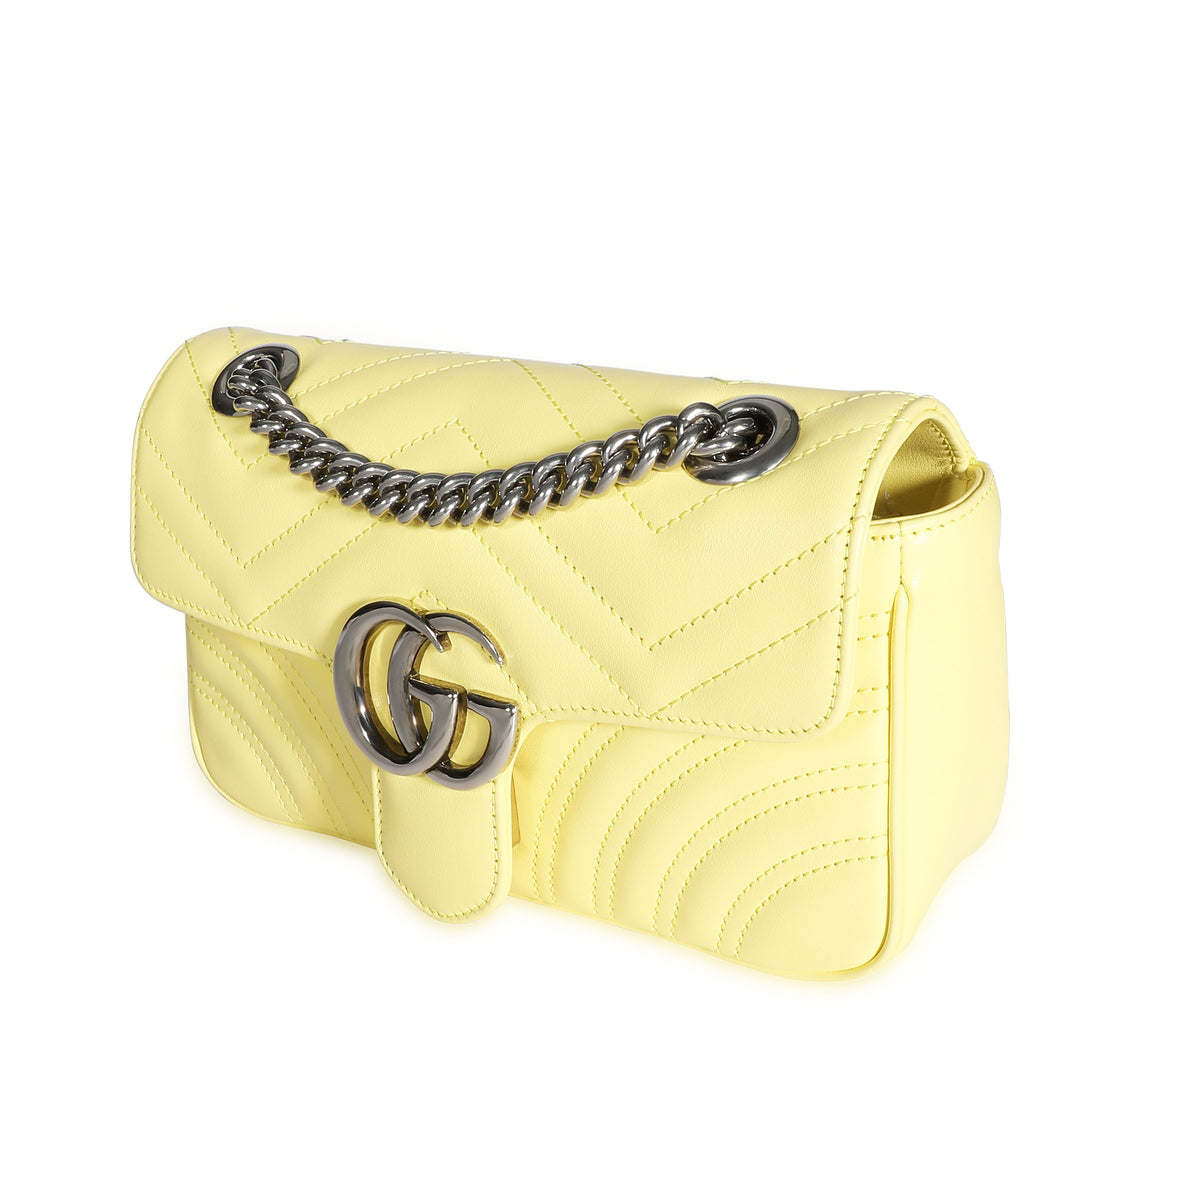 Gucci Pastel Yellow Matelassé Leather GG Marmont Mini Bag